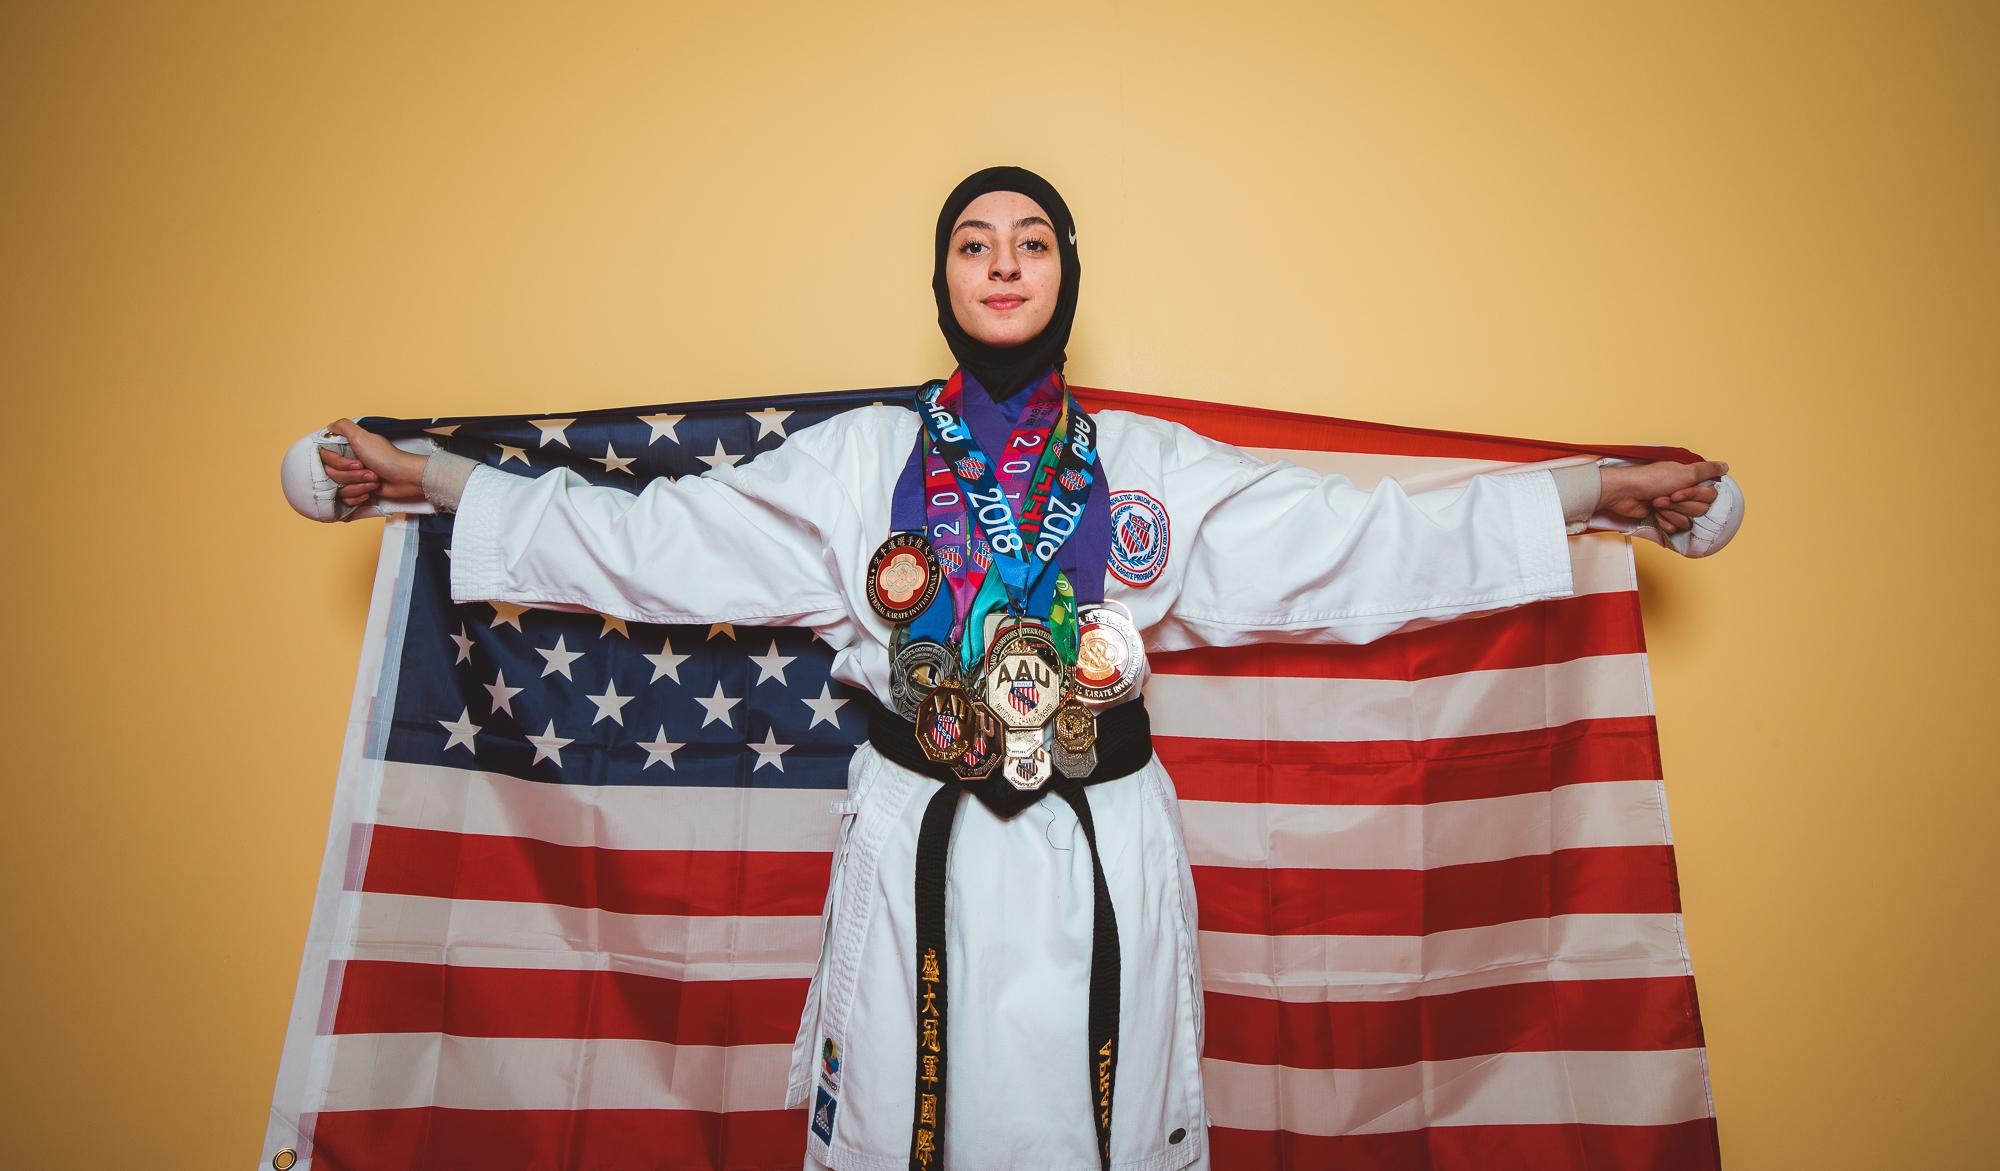 SINGLES - Aprar Hassan is a 19-year-old, Muslim-American Karate...